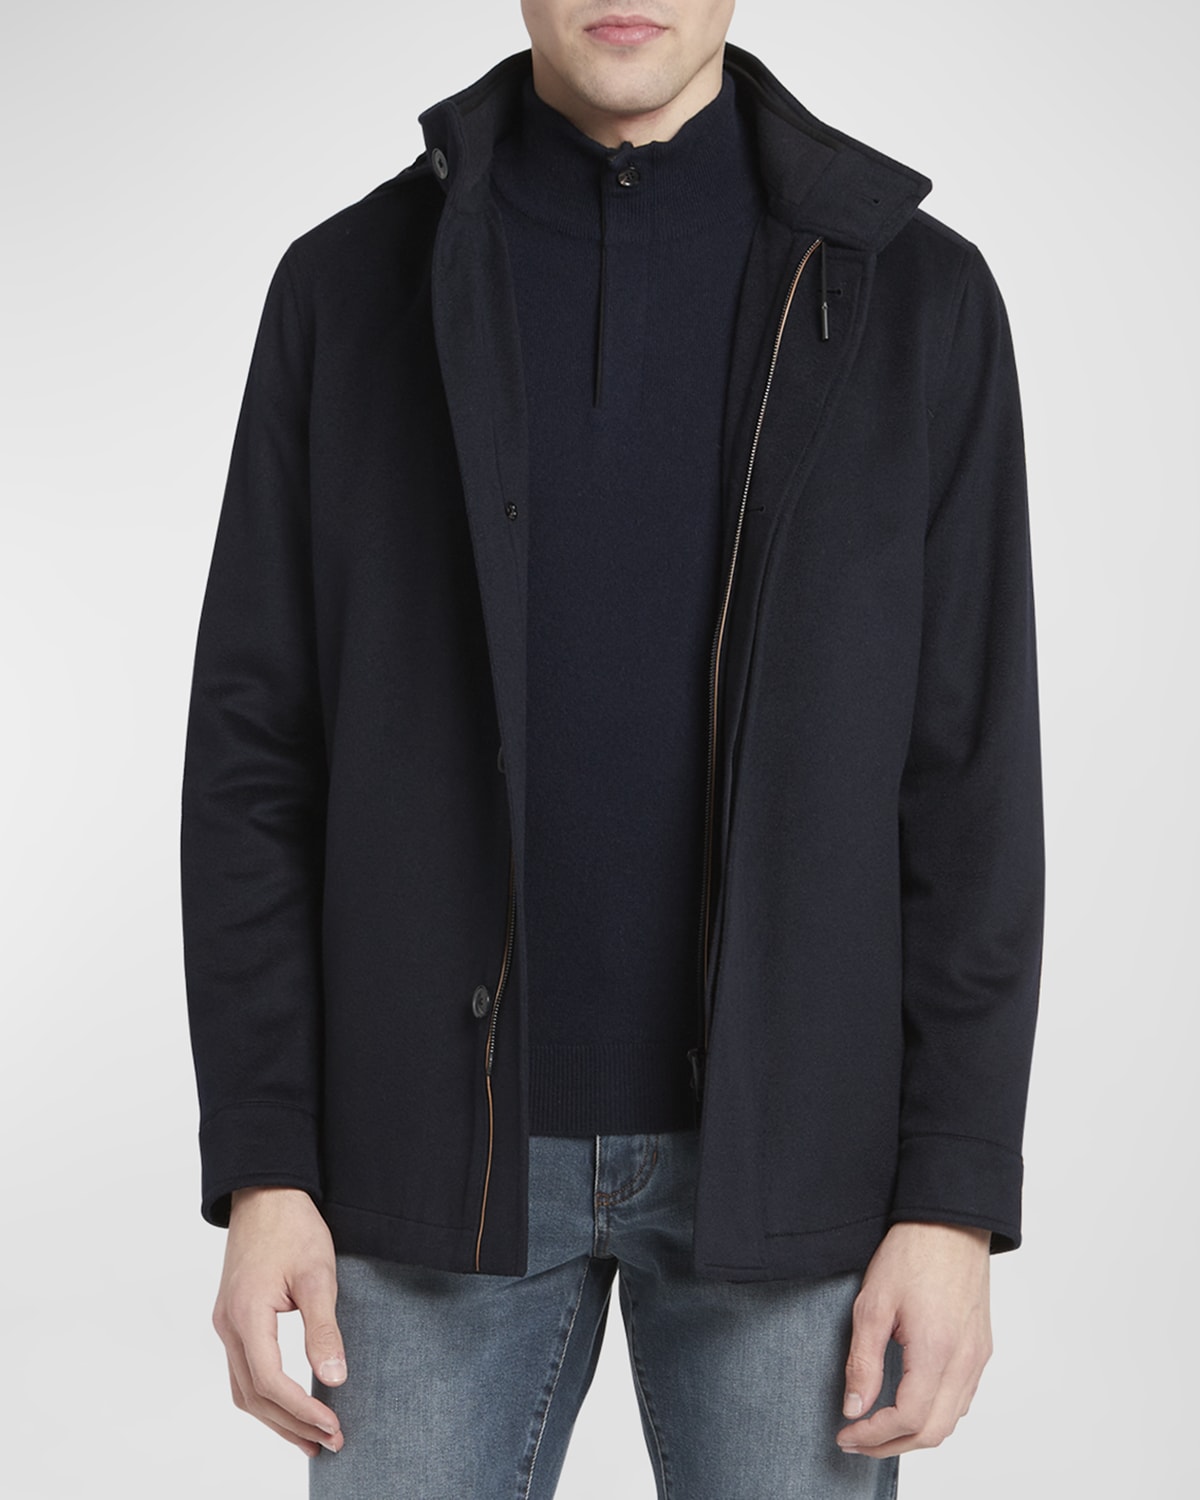 Zegna Men's Cashmere Oasi Hooded Jacket In Navy Solid